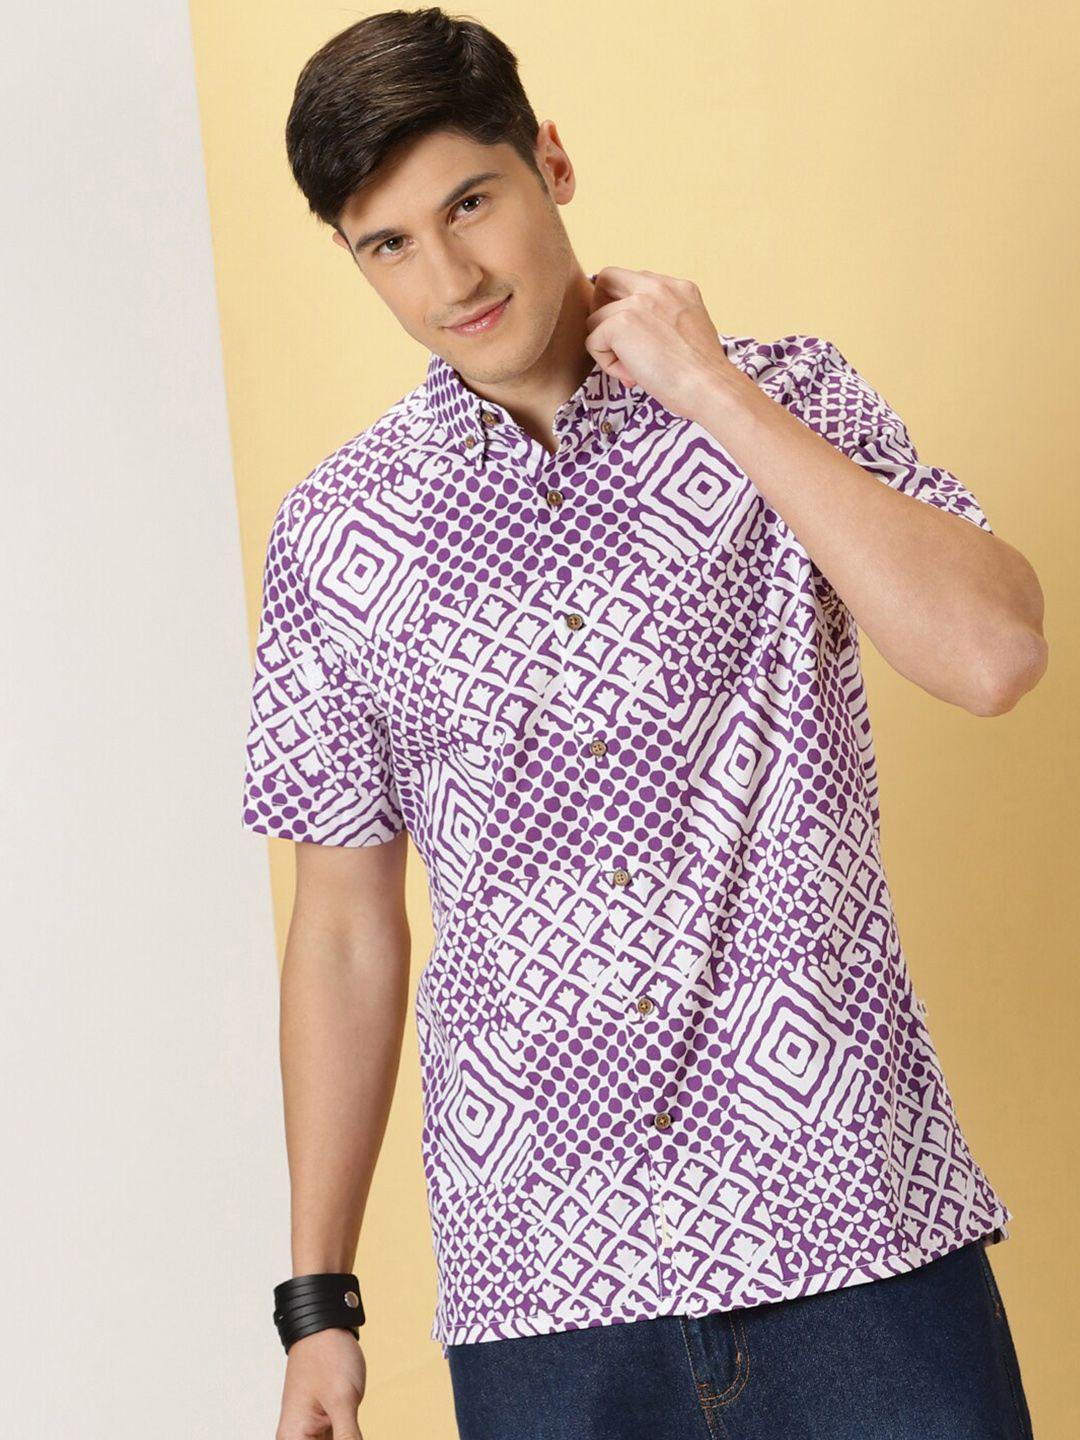 thomas scott smart opaque printed cotton casual shirt